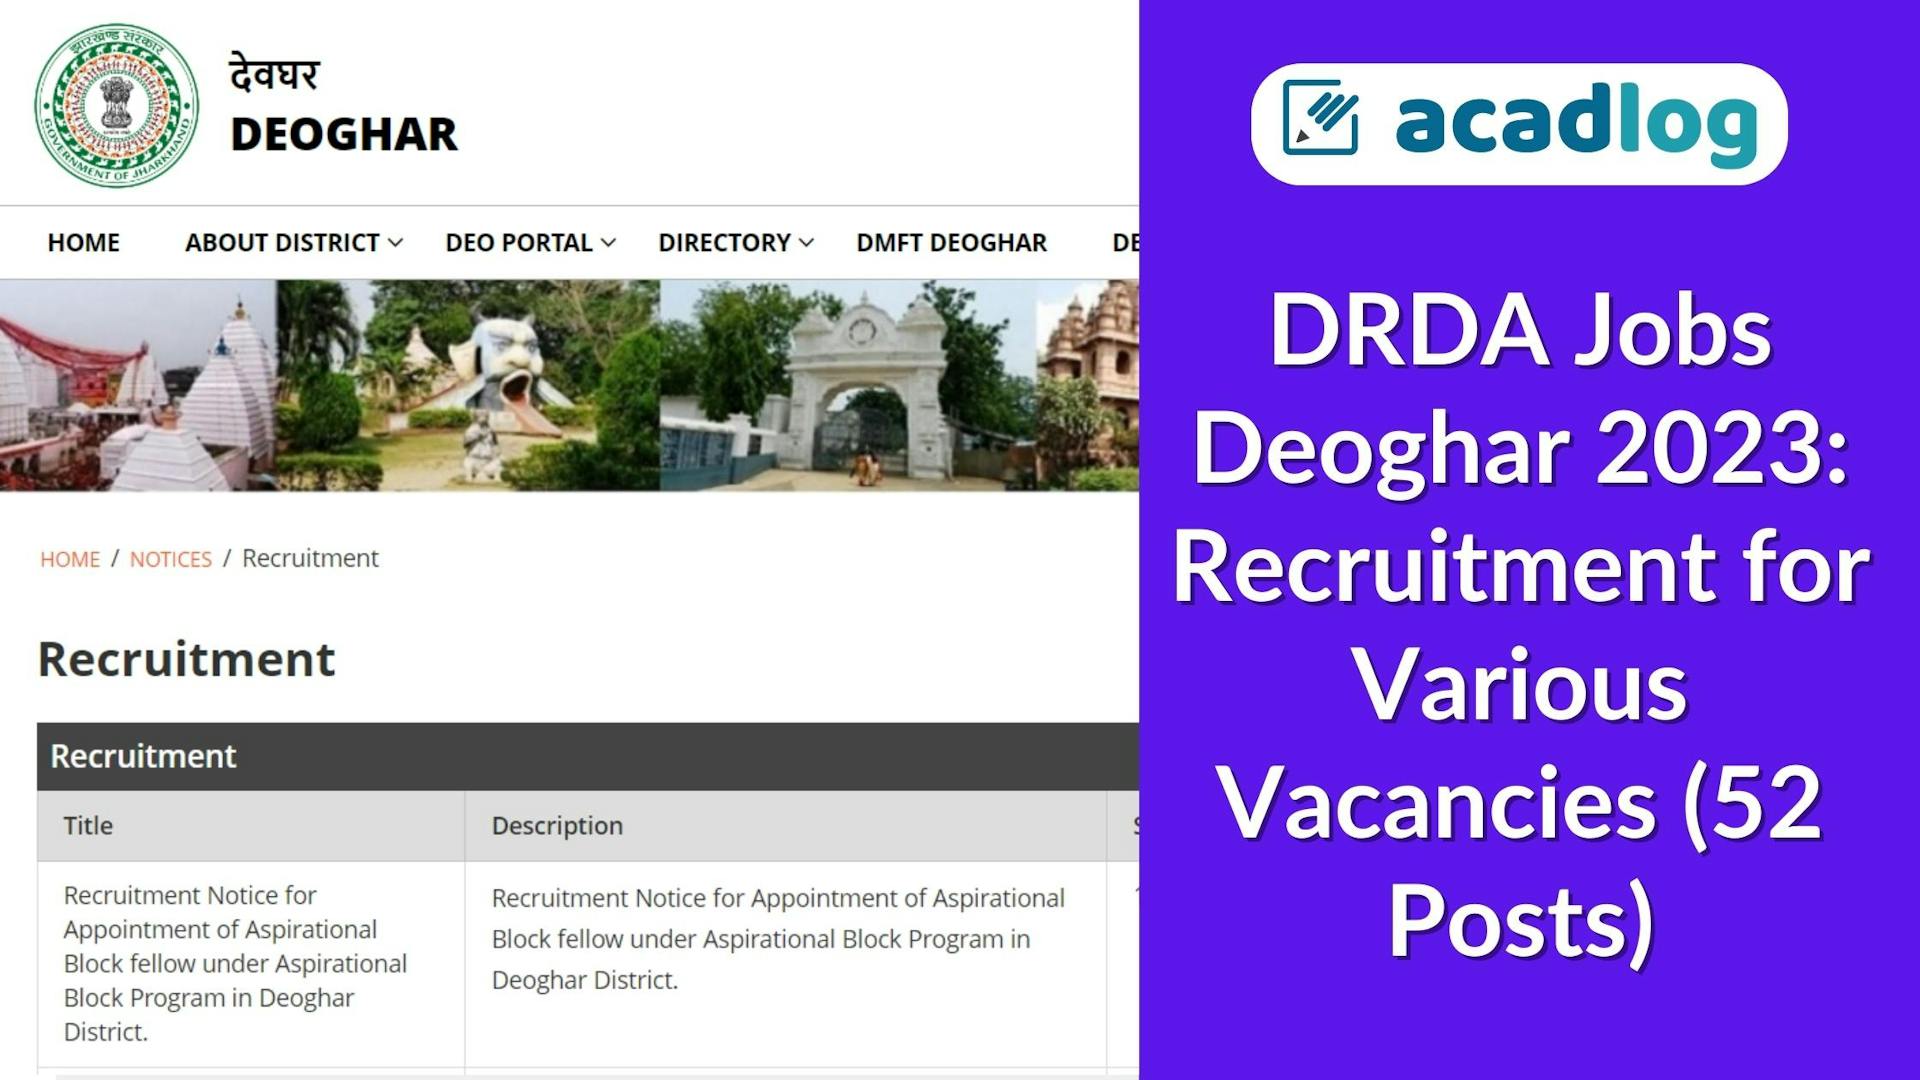 DRDA Jobs Deoghar 2023: Recruitment for Various Vacancies (52 Posts)